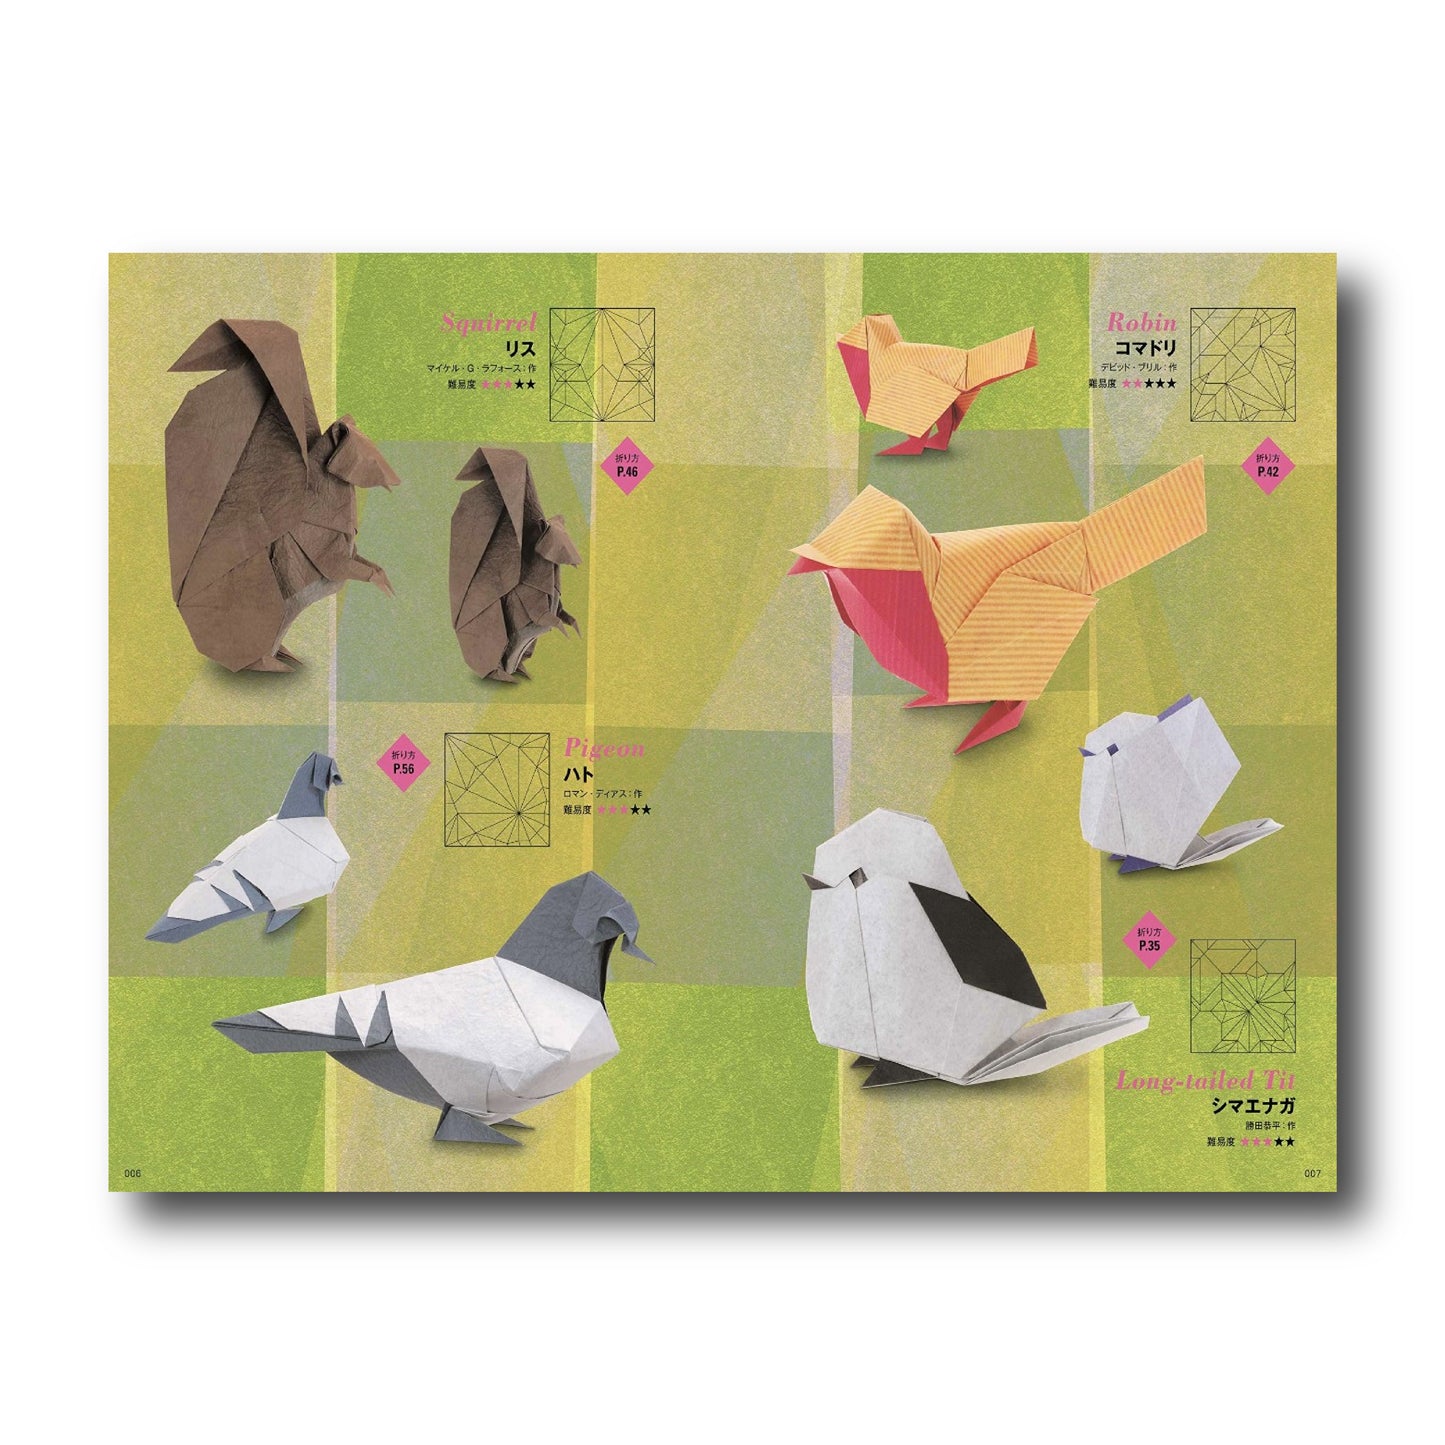 The Elegance of Origami/高雅な折り紙